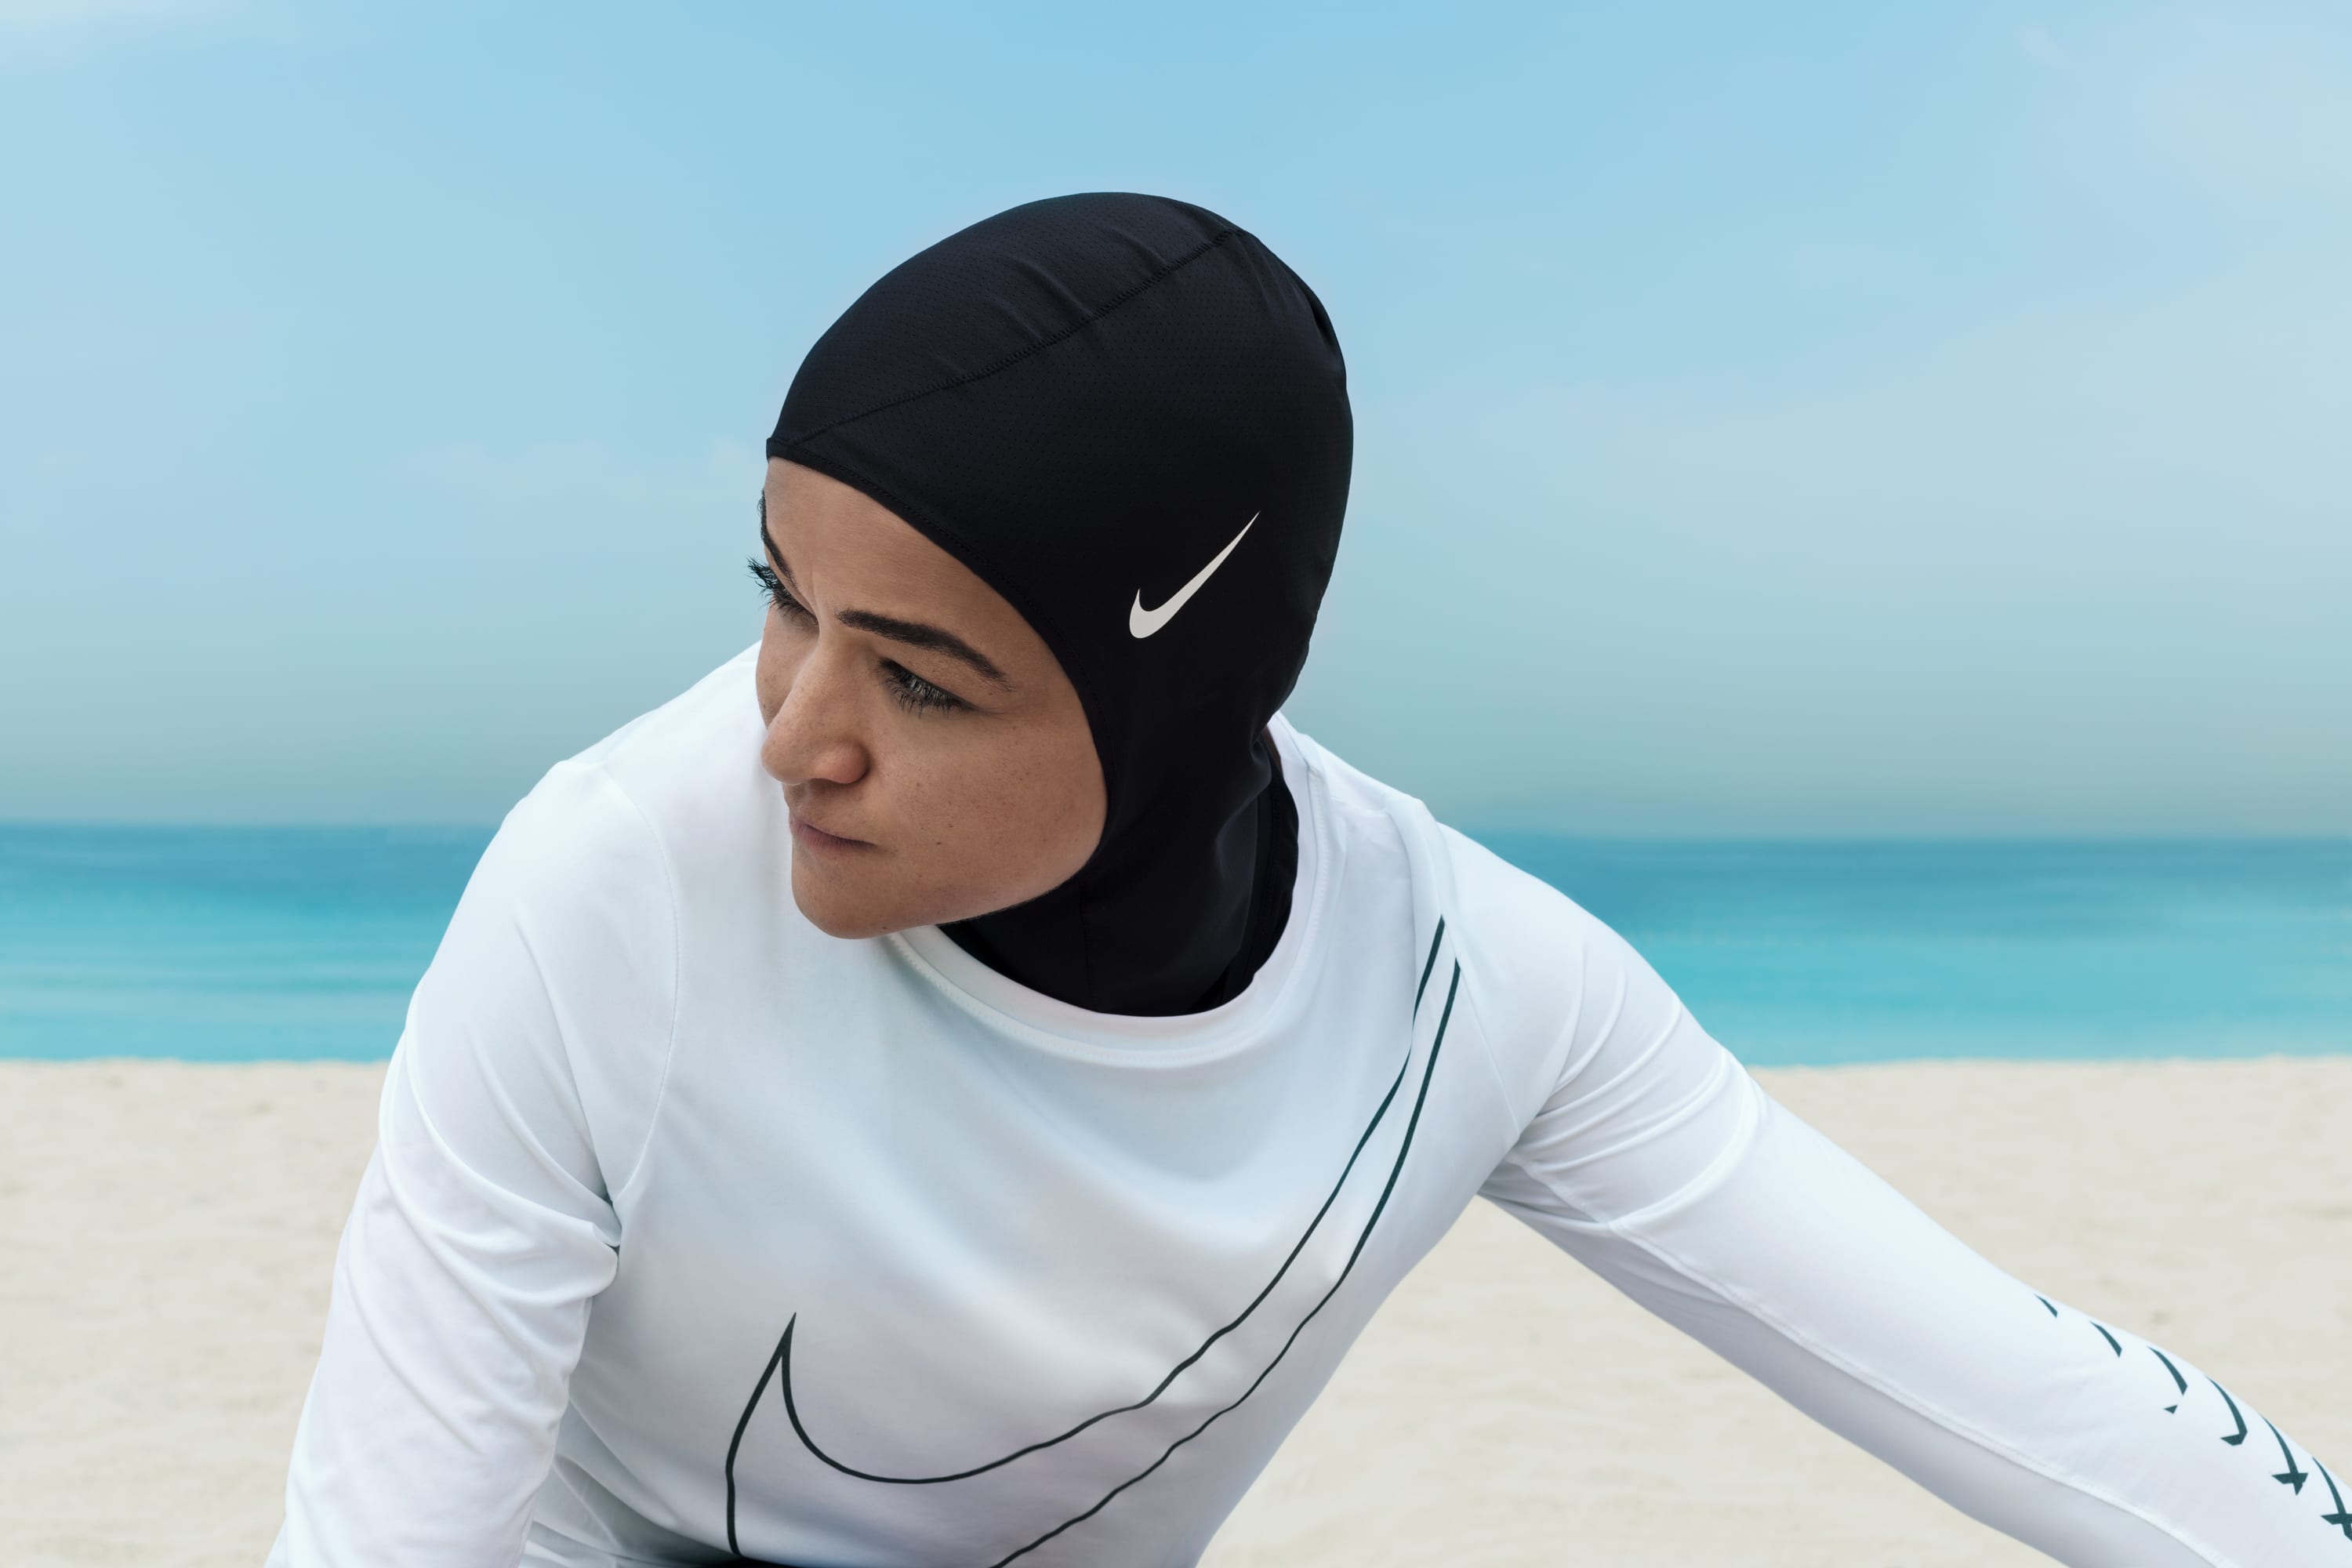 Nike sports latest Middle Eastern push